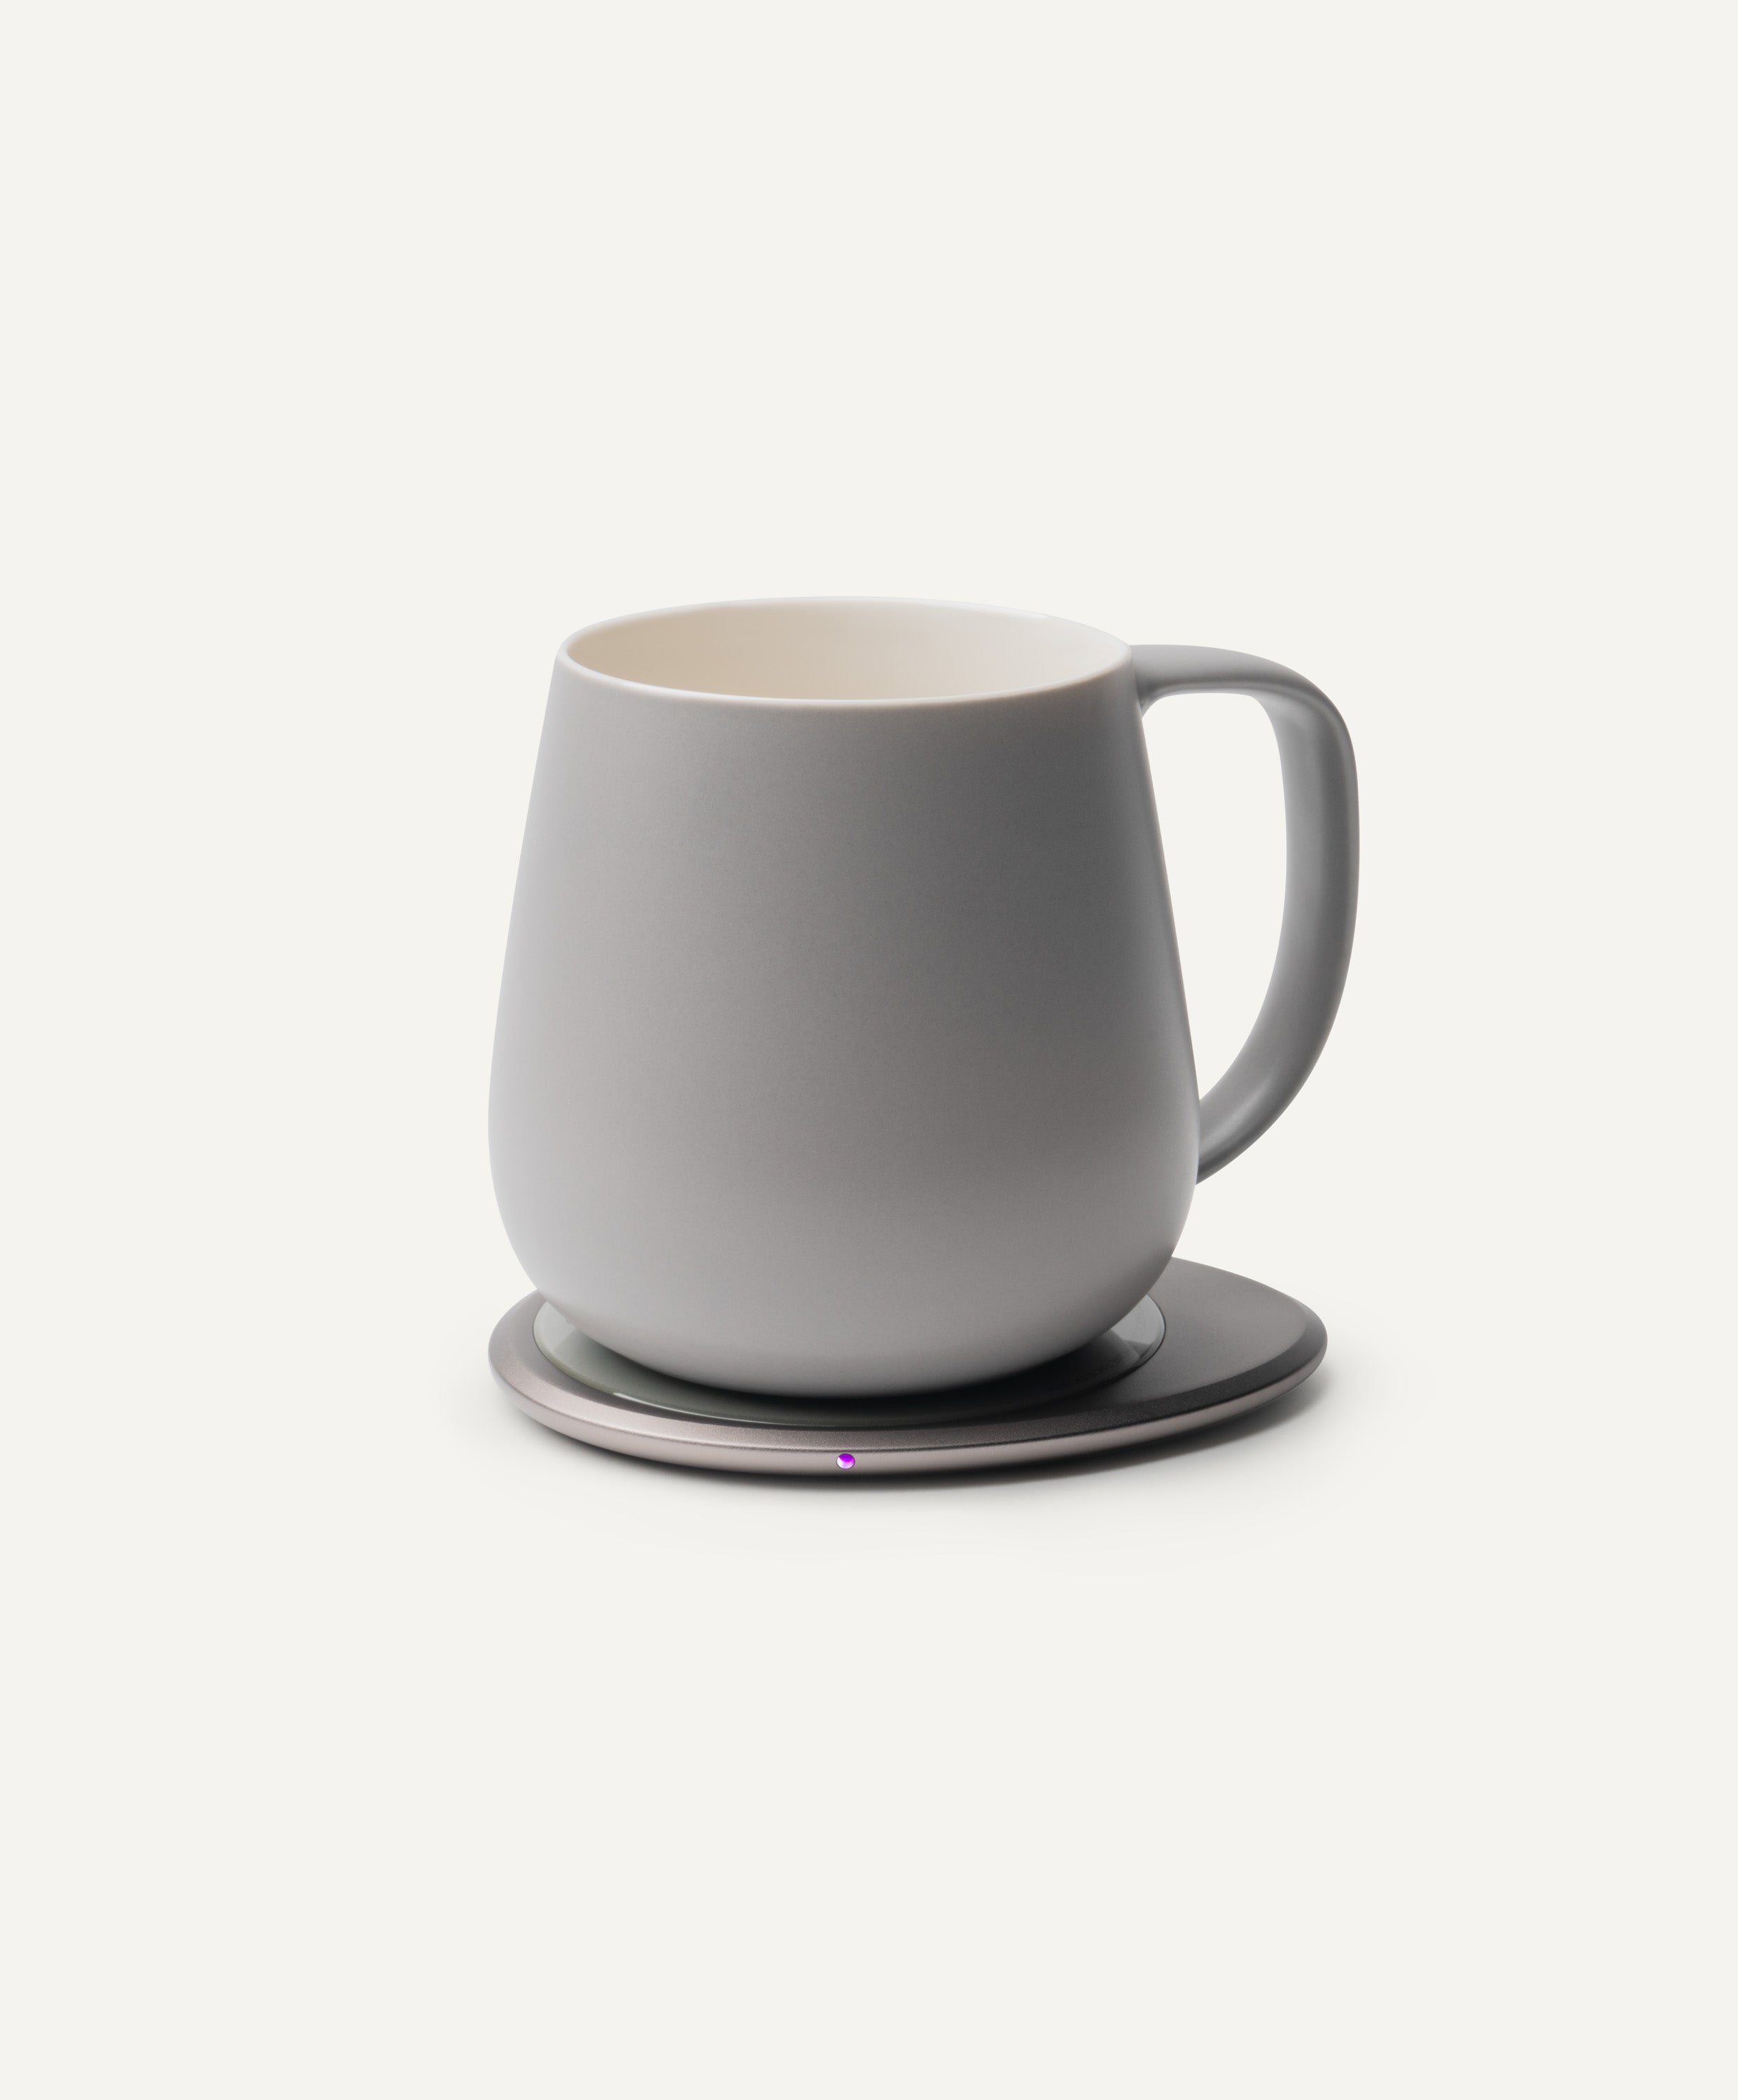 Ui+ Self-heating Mug Set - Soft Gray